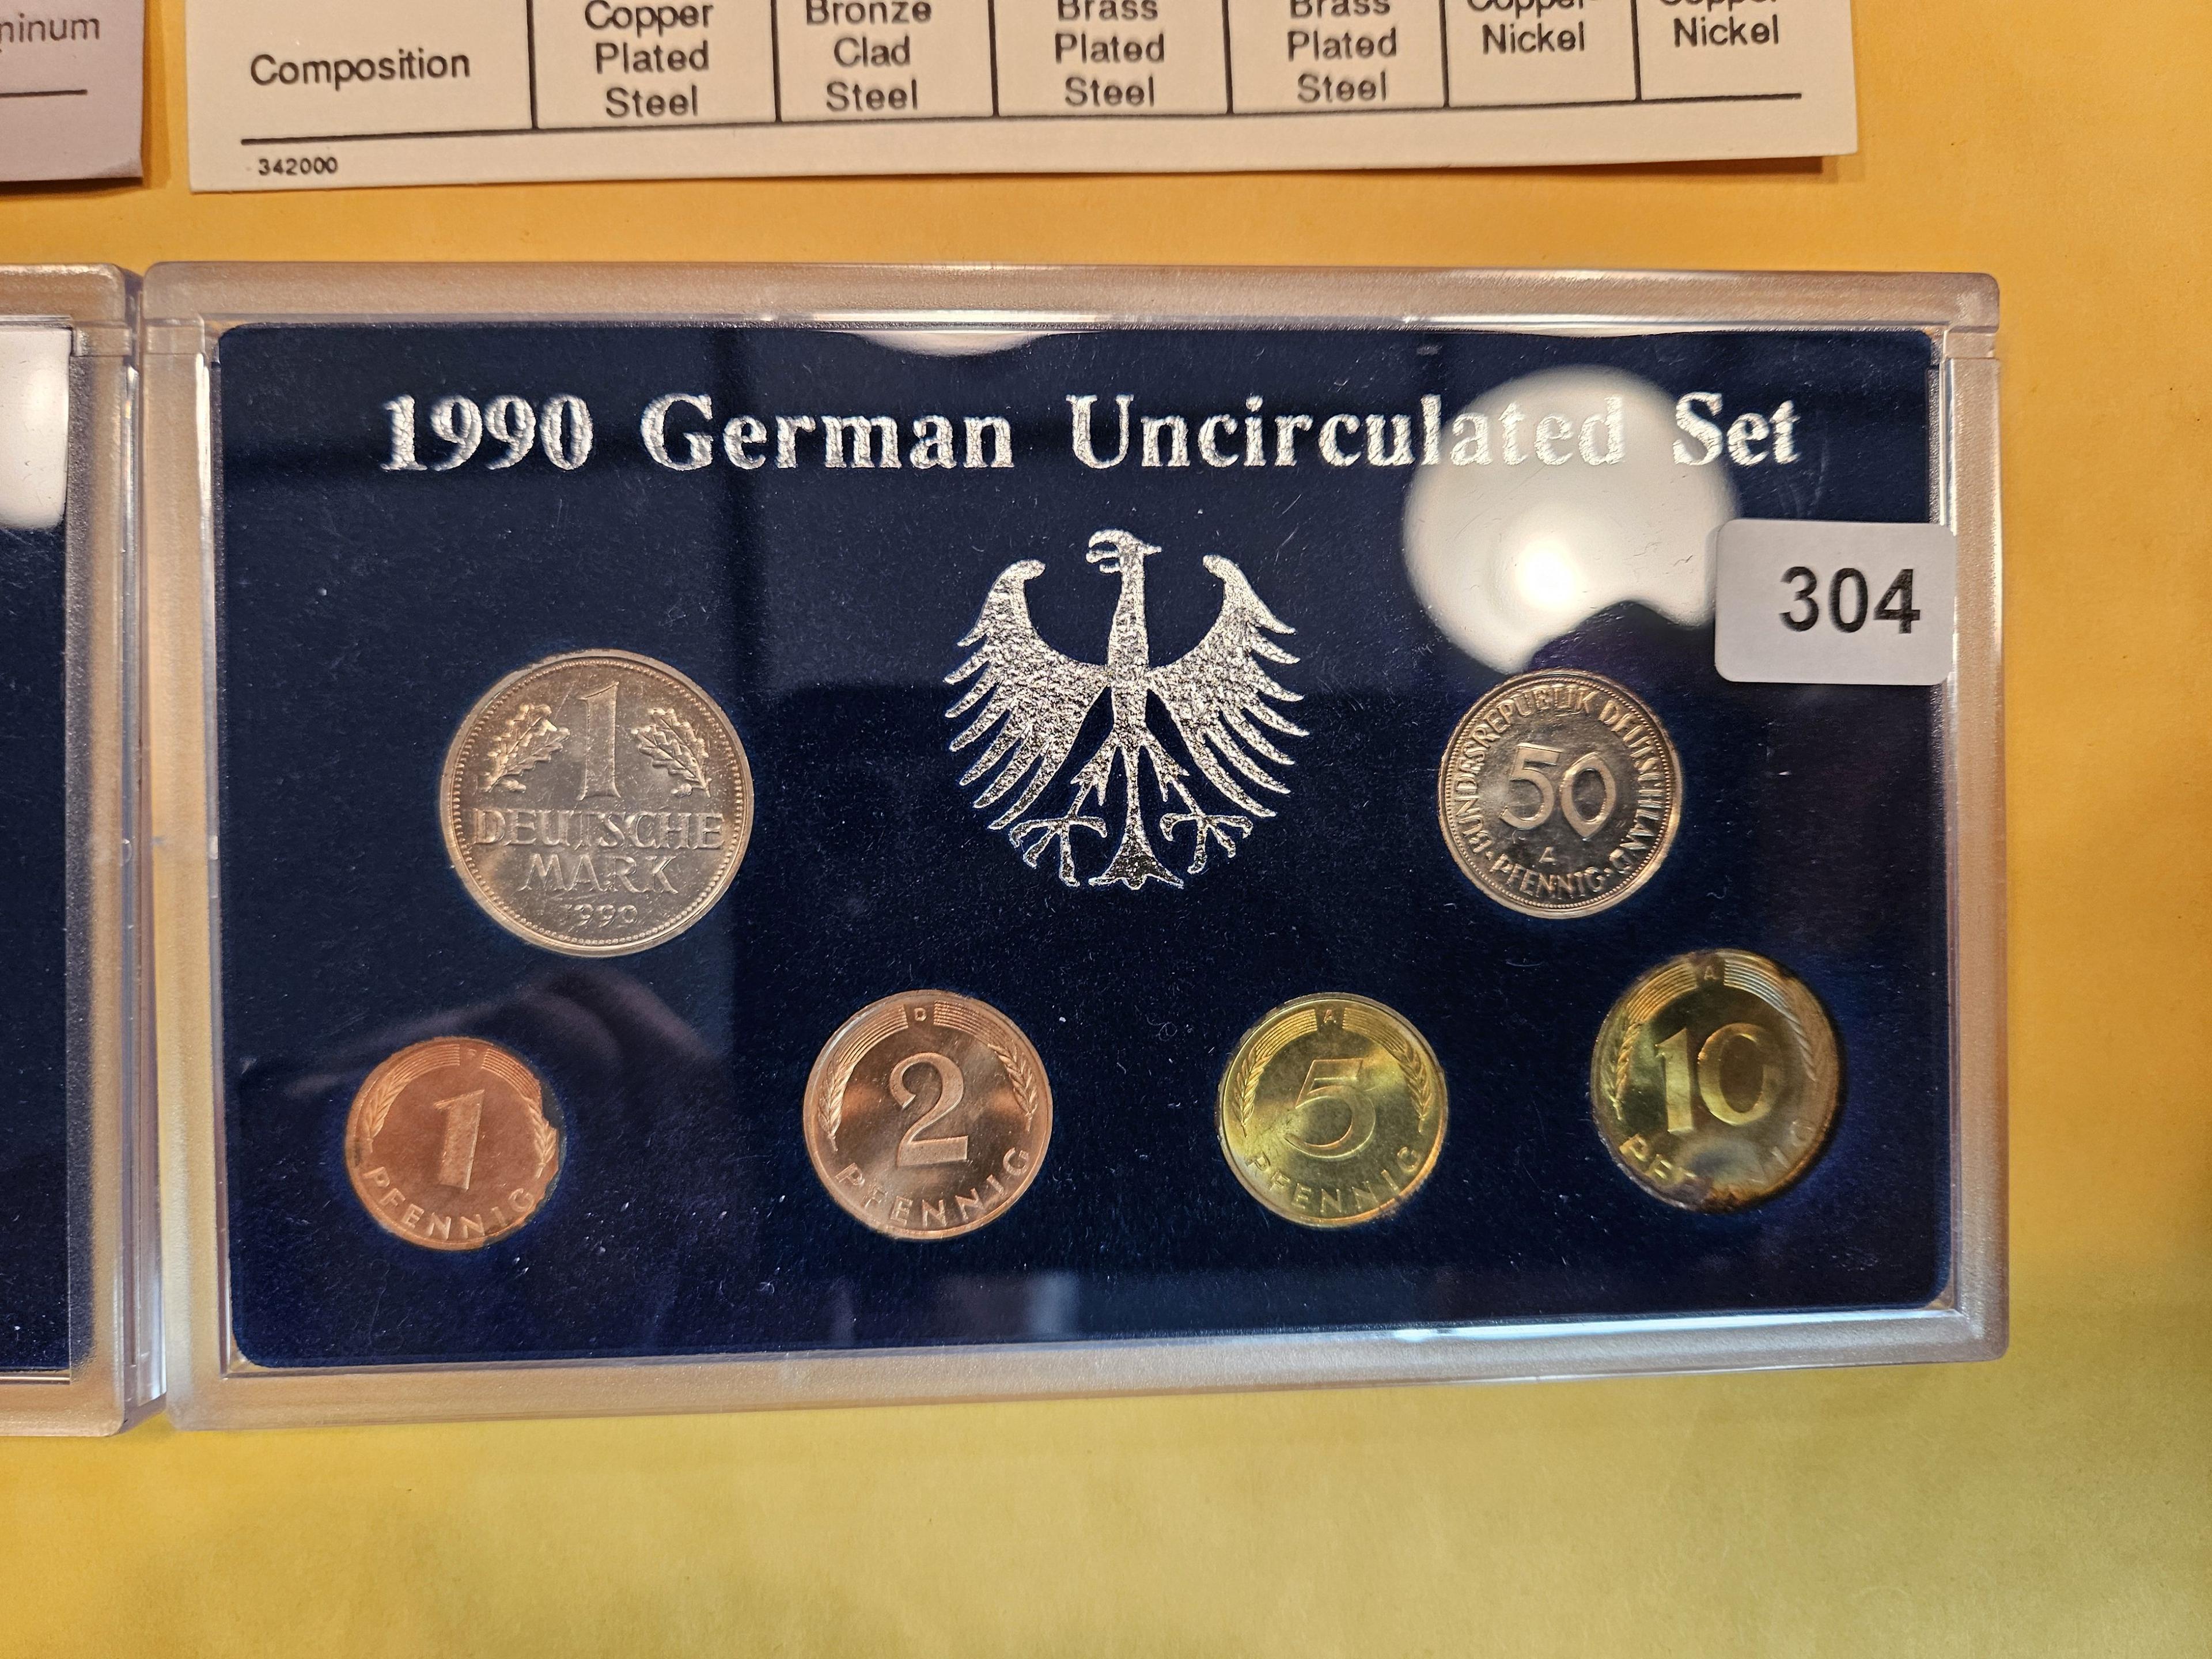 1982 East German and 1990 German BU Coin Sets